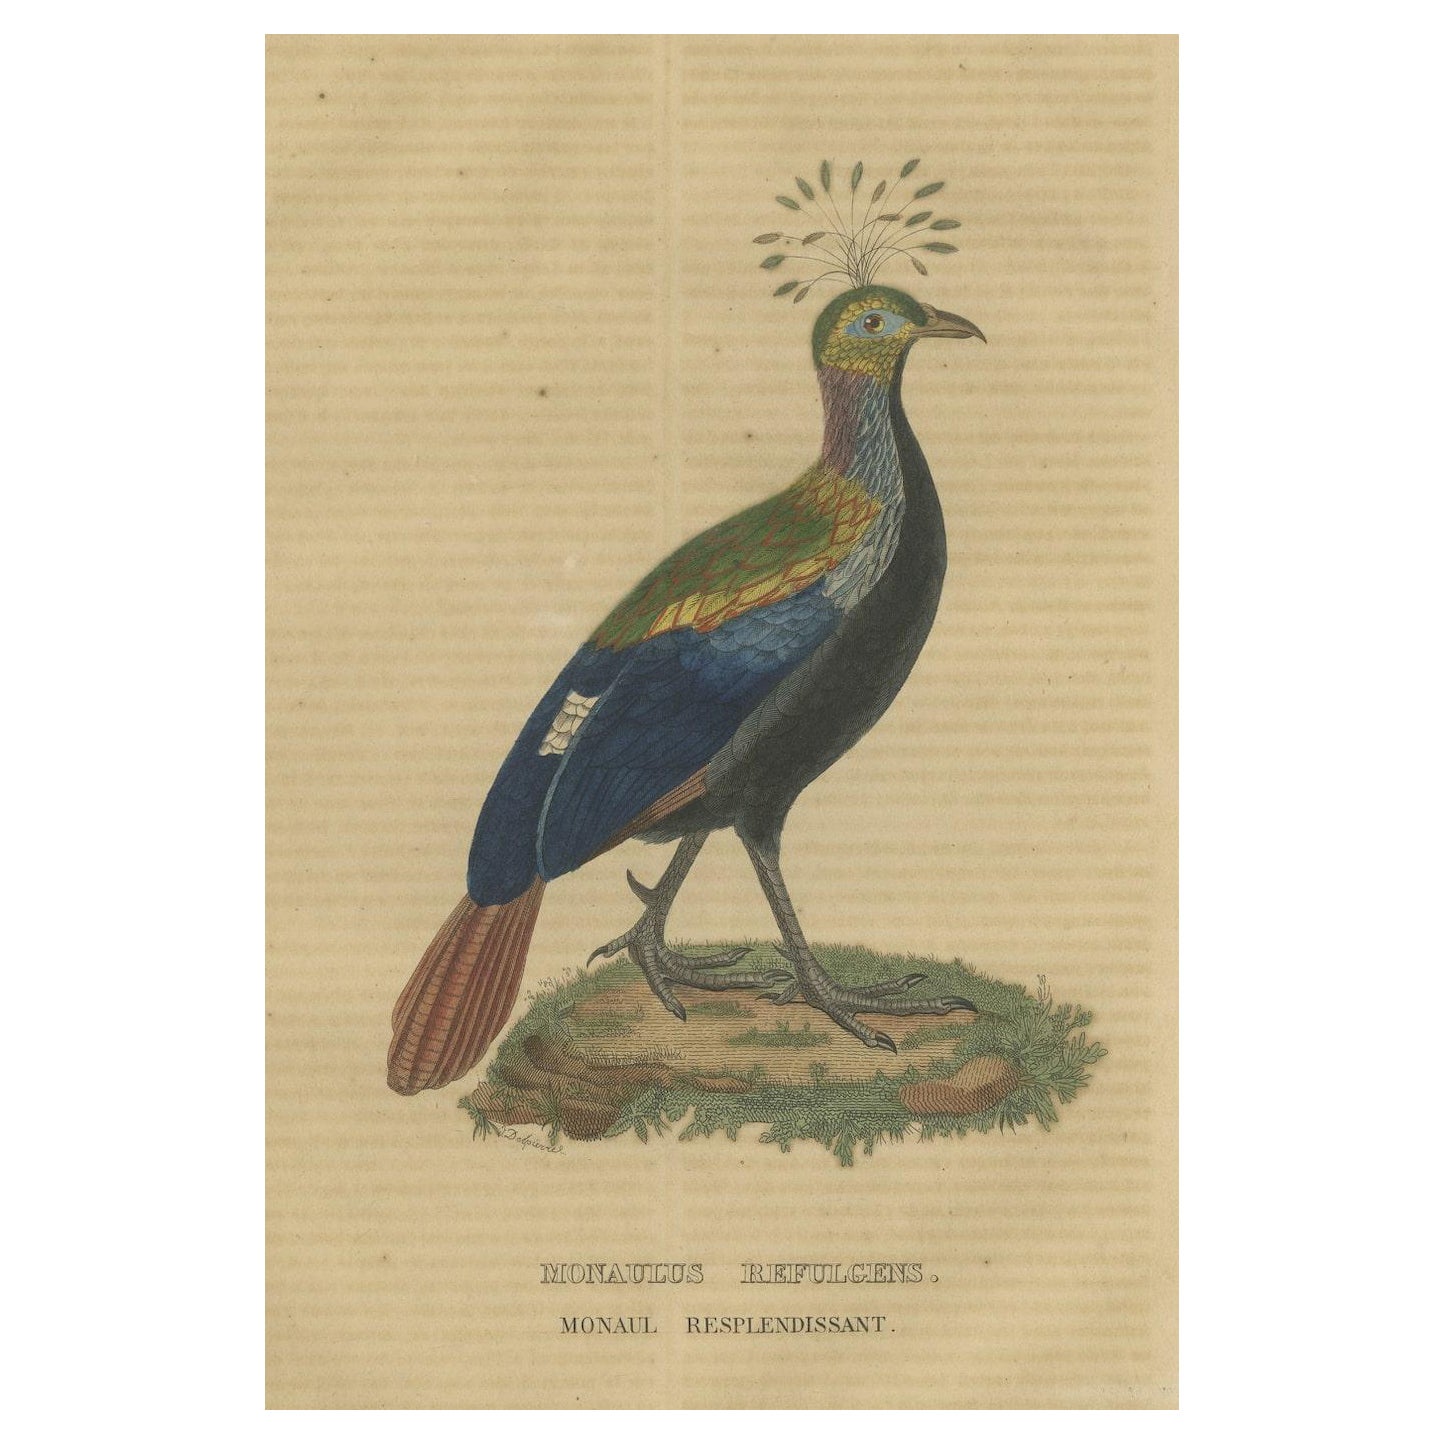 The National Bird of Nepal, the Himalayan or Impeyan Monal, Pheasant or Danphe